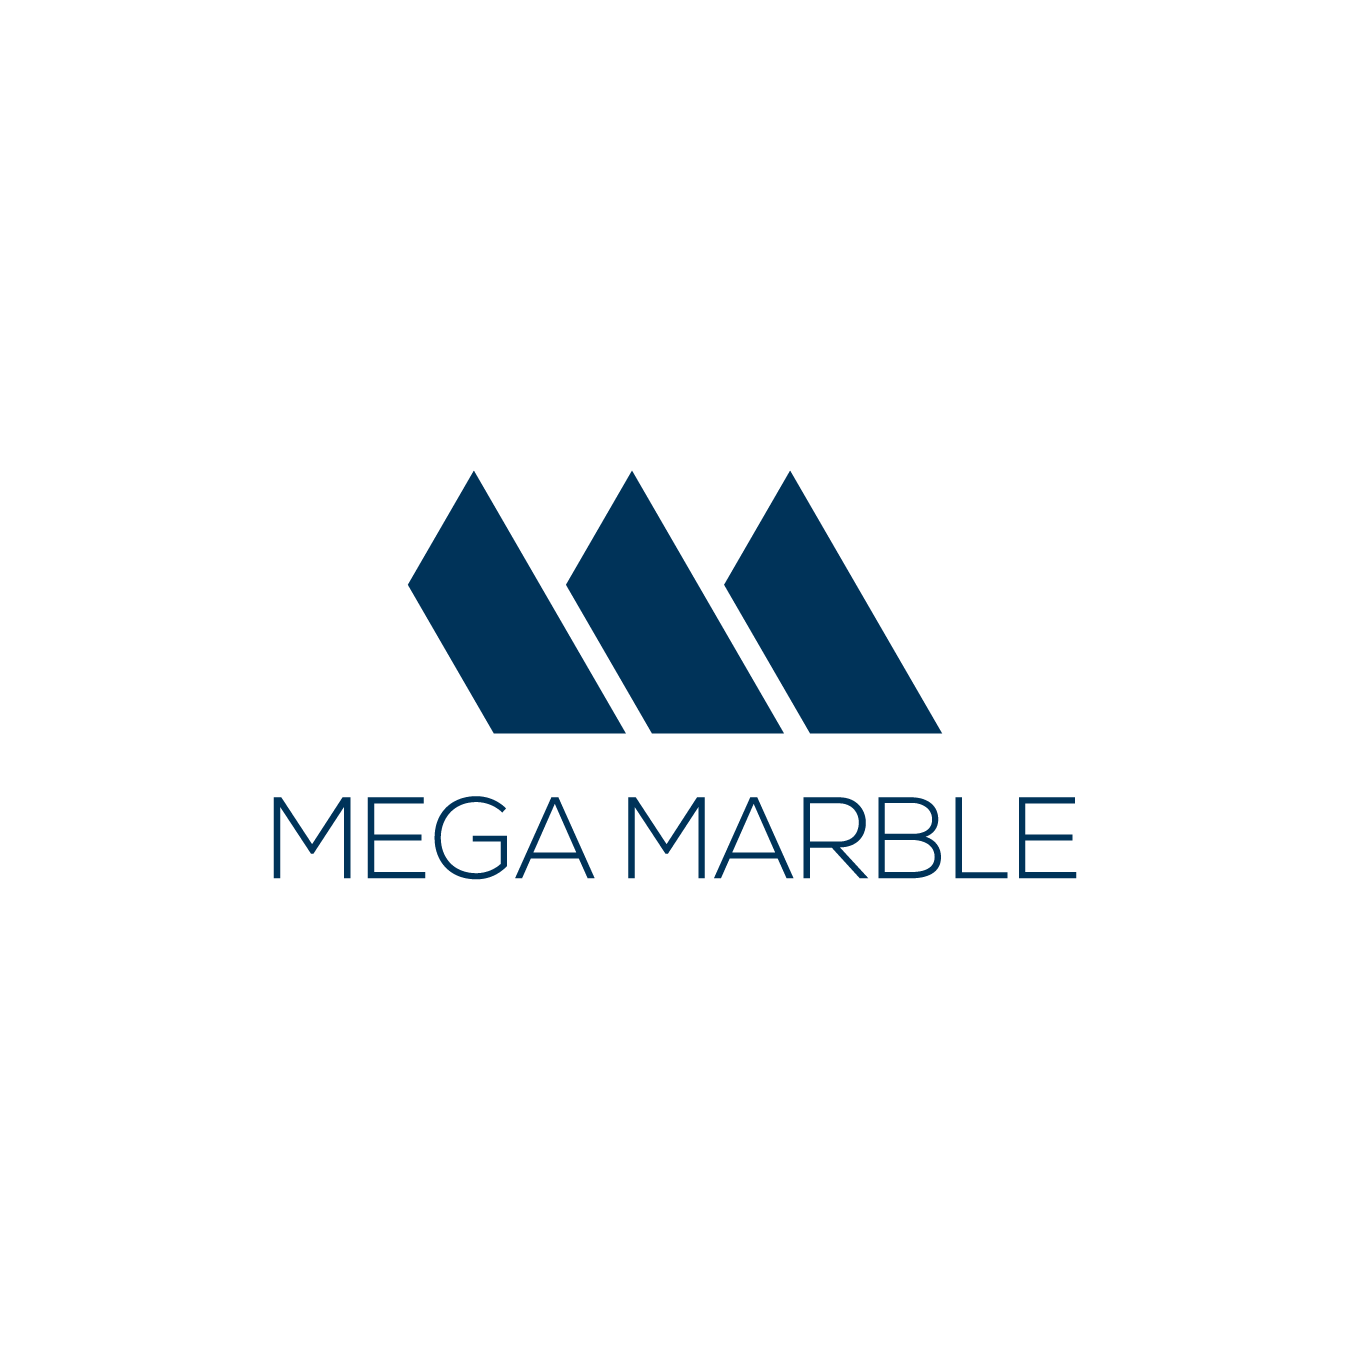 Marble Logo - Professional, Modern, Construction Logo Design for Mega Marble by k ...